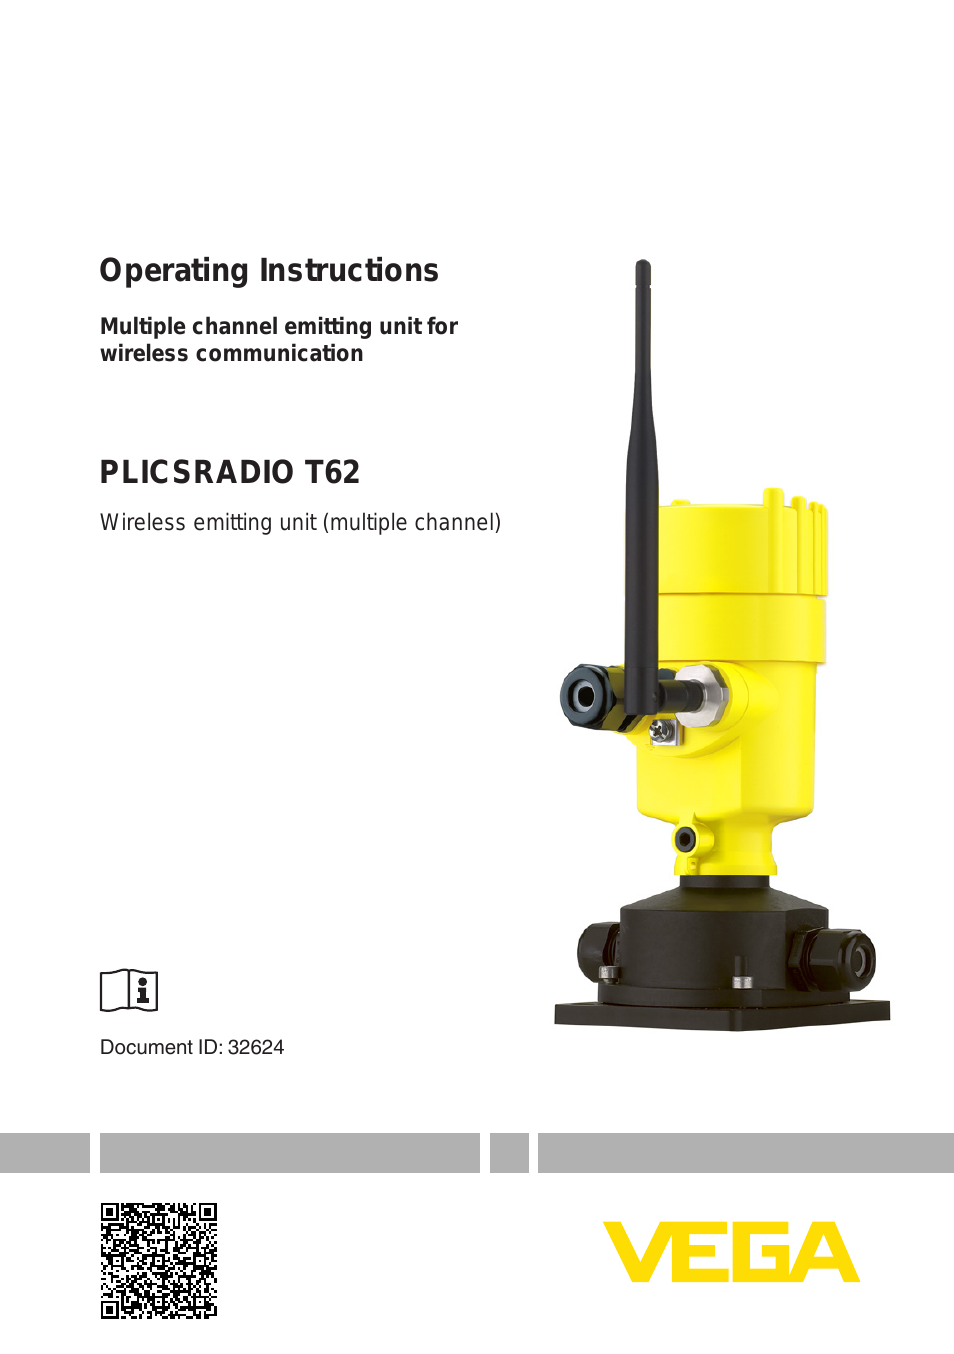 PLICSRADIO T62 Wireless emitting unit